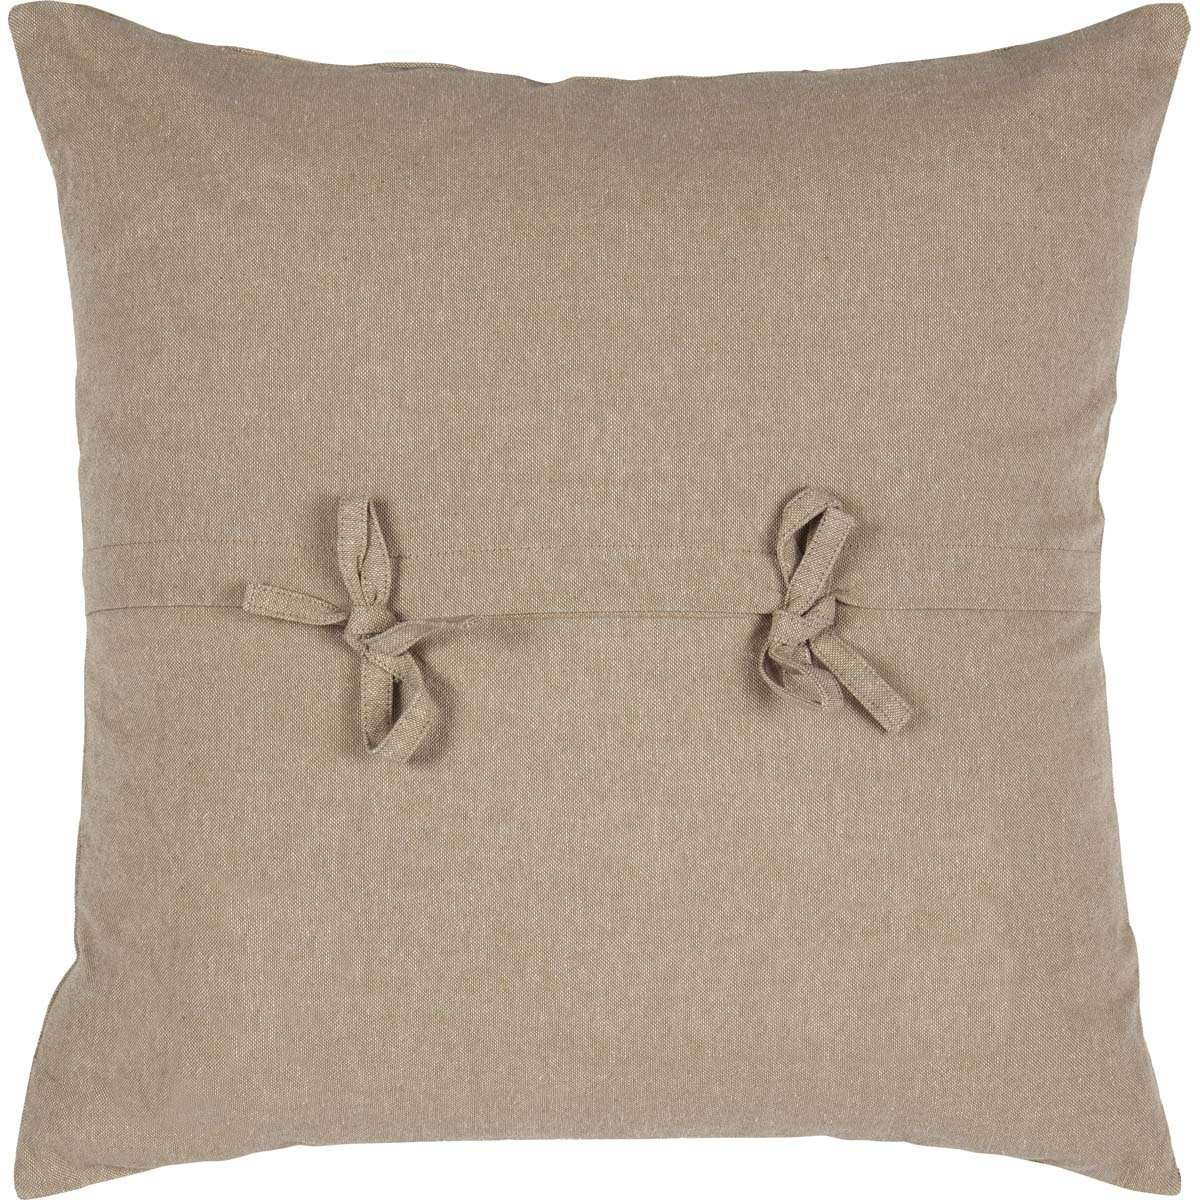 Sawyer Mill Charcoal Poultry Pillow 18" Khaki, Asphalt Pillows VHC Brands 